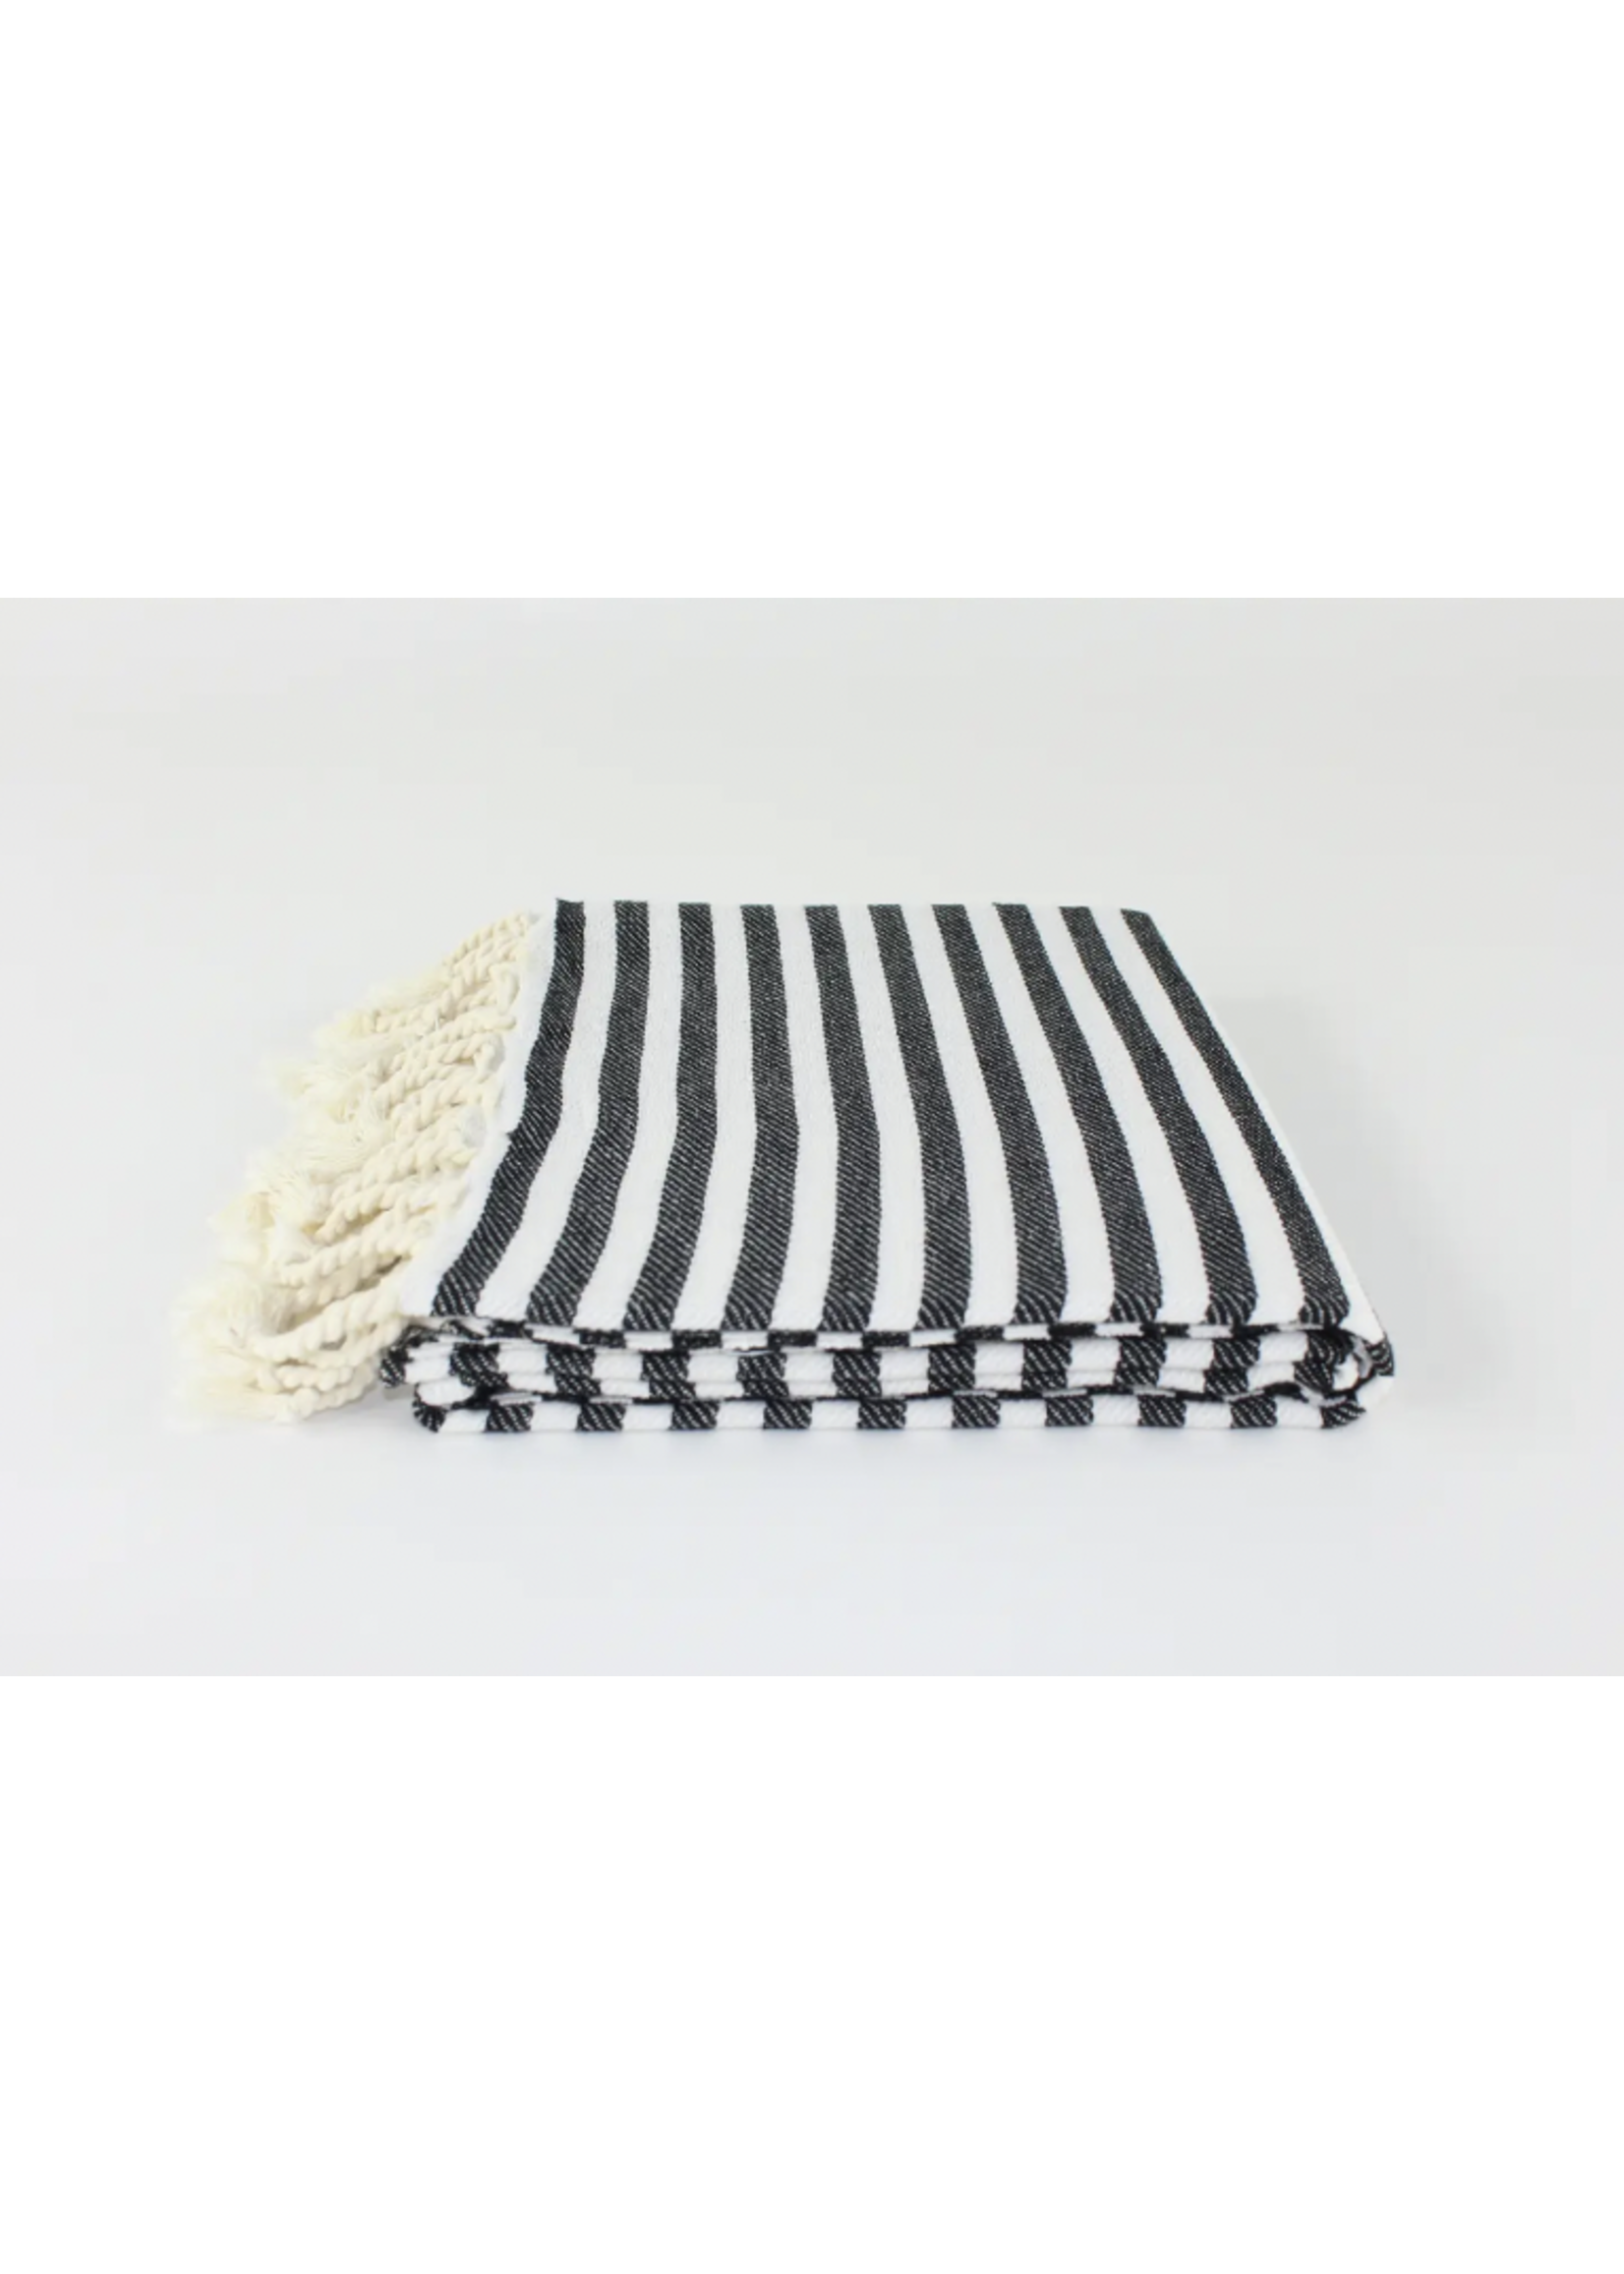 Turkish Linens & Towels Turkish Towel Striped Peshtemal Black